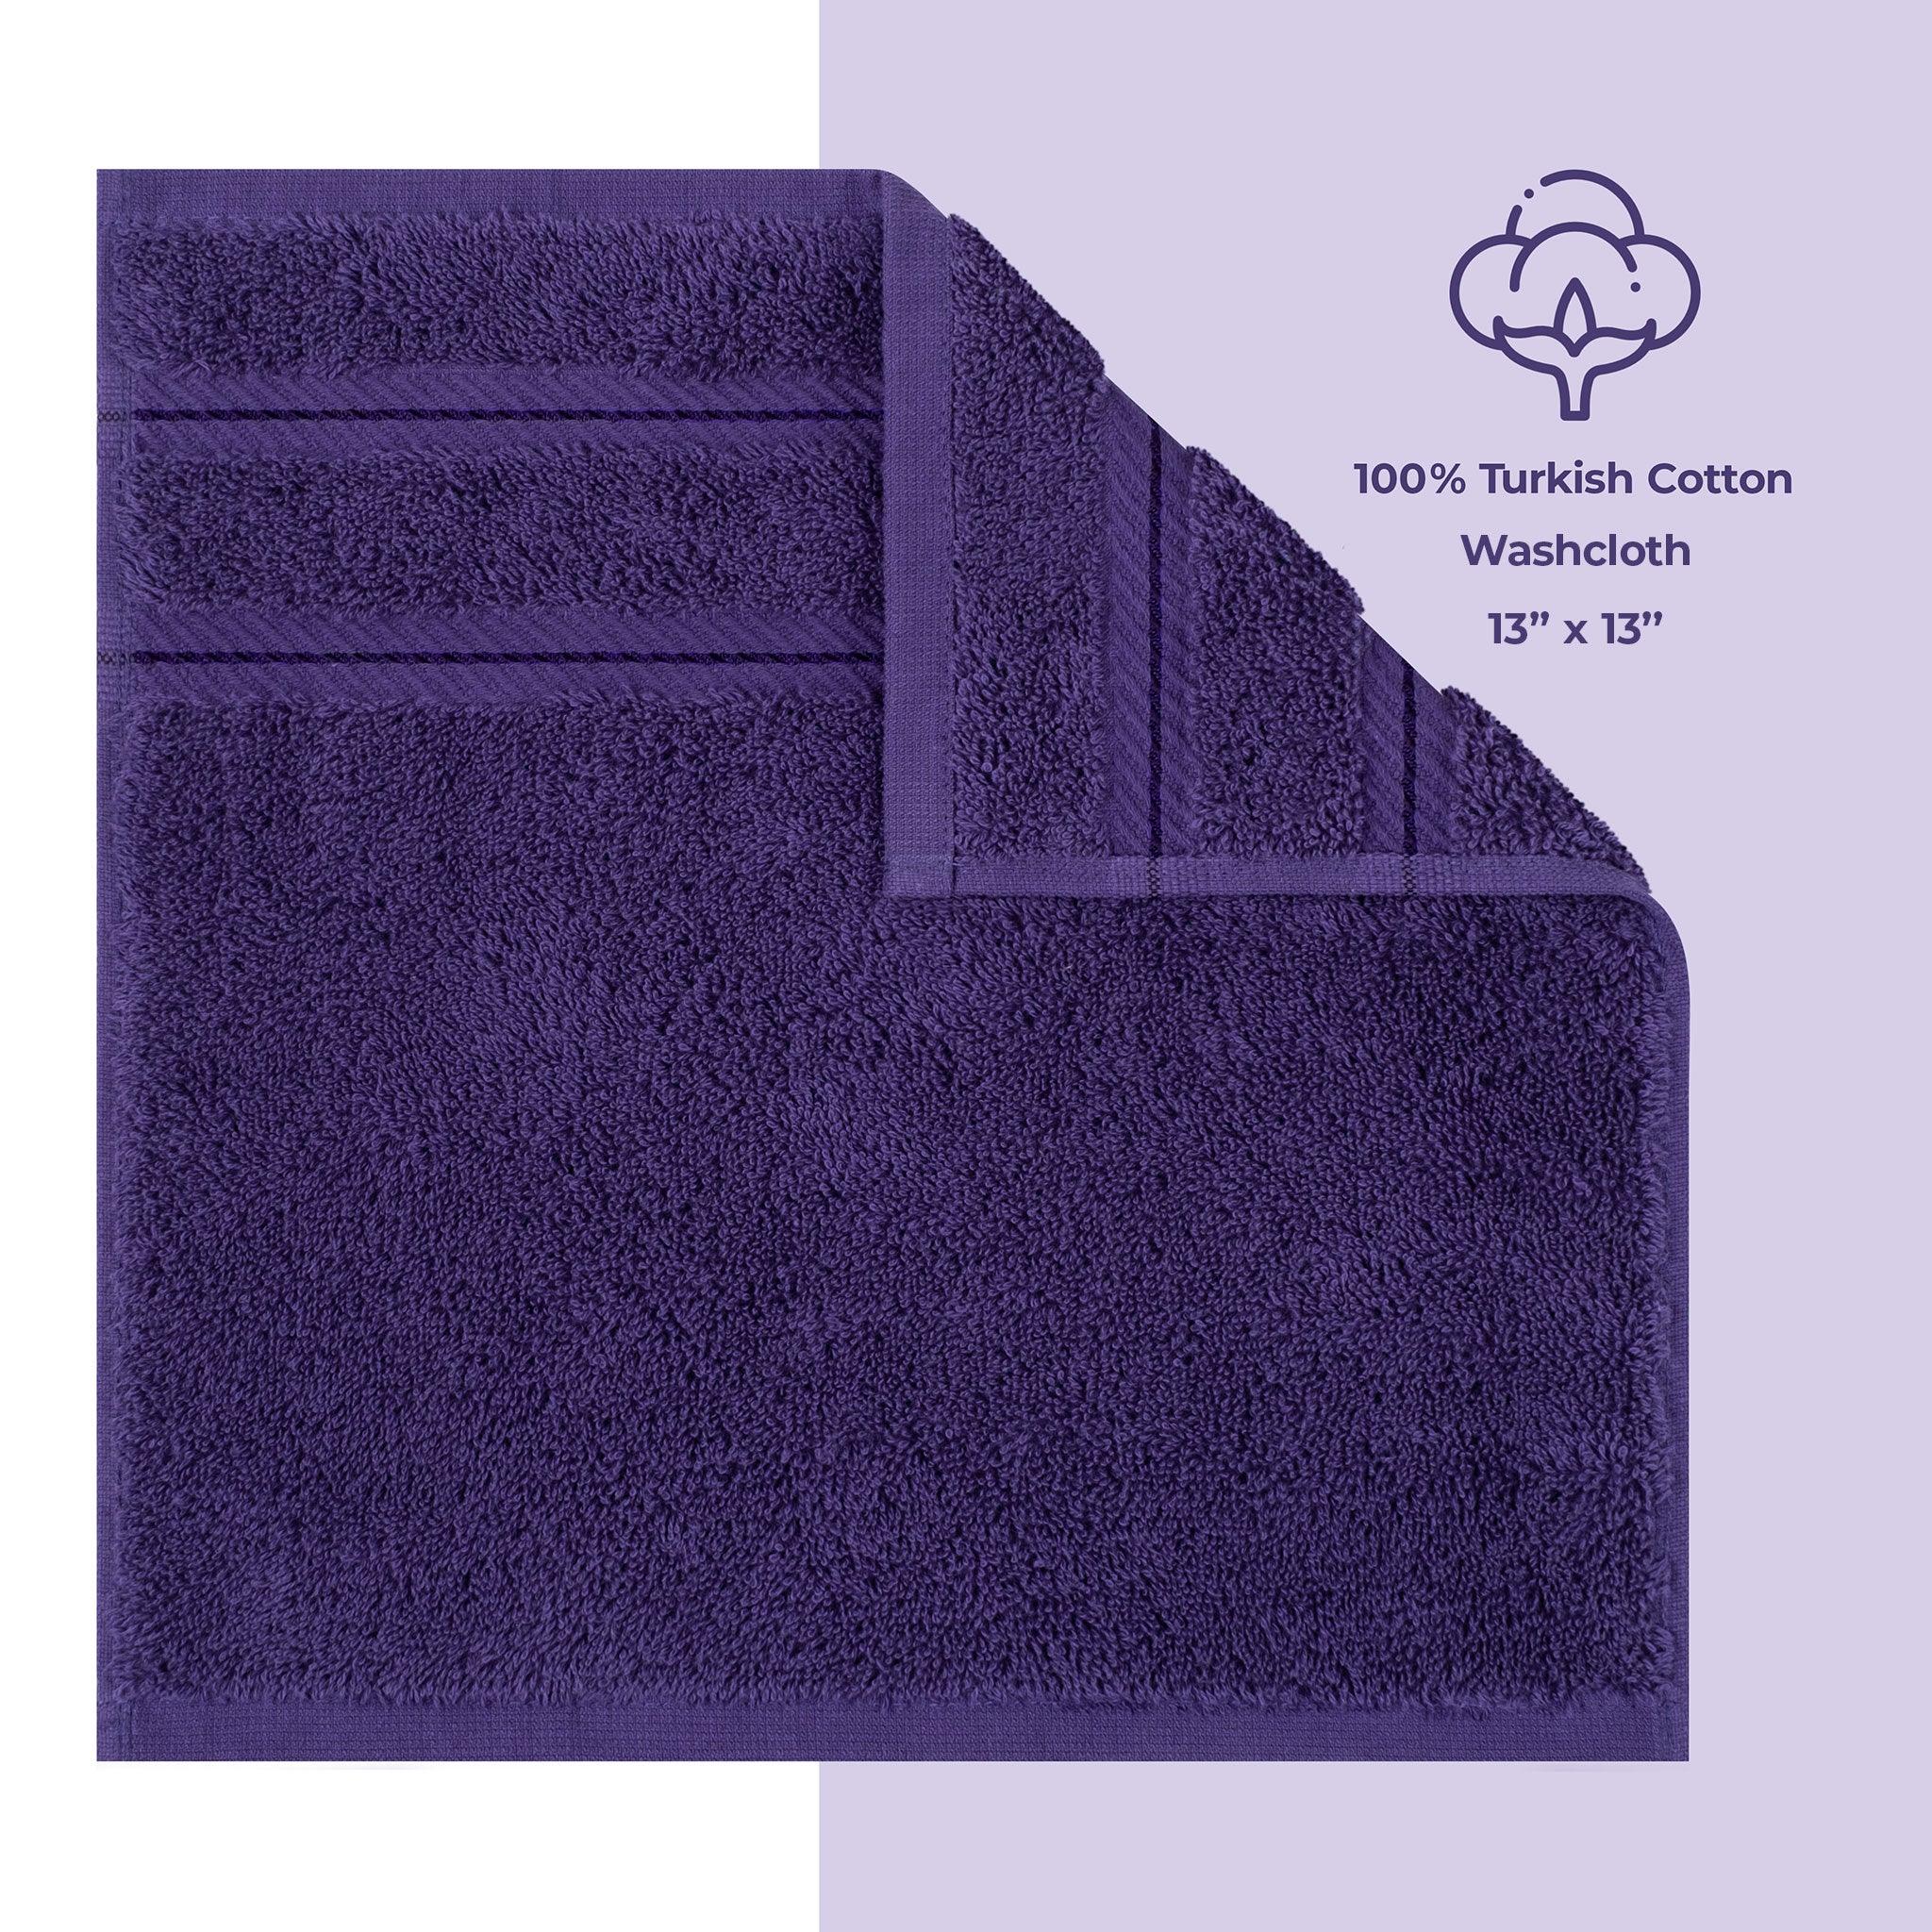 American Soft Linen - Single Piece Turkish Cotton Washcloth Towels - Purple - 1